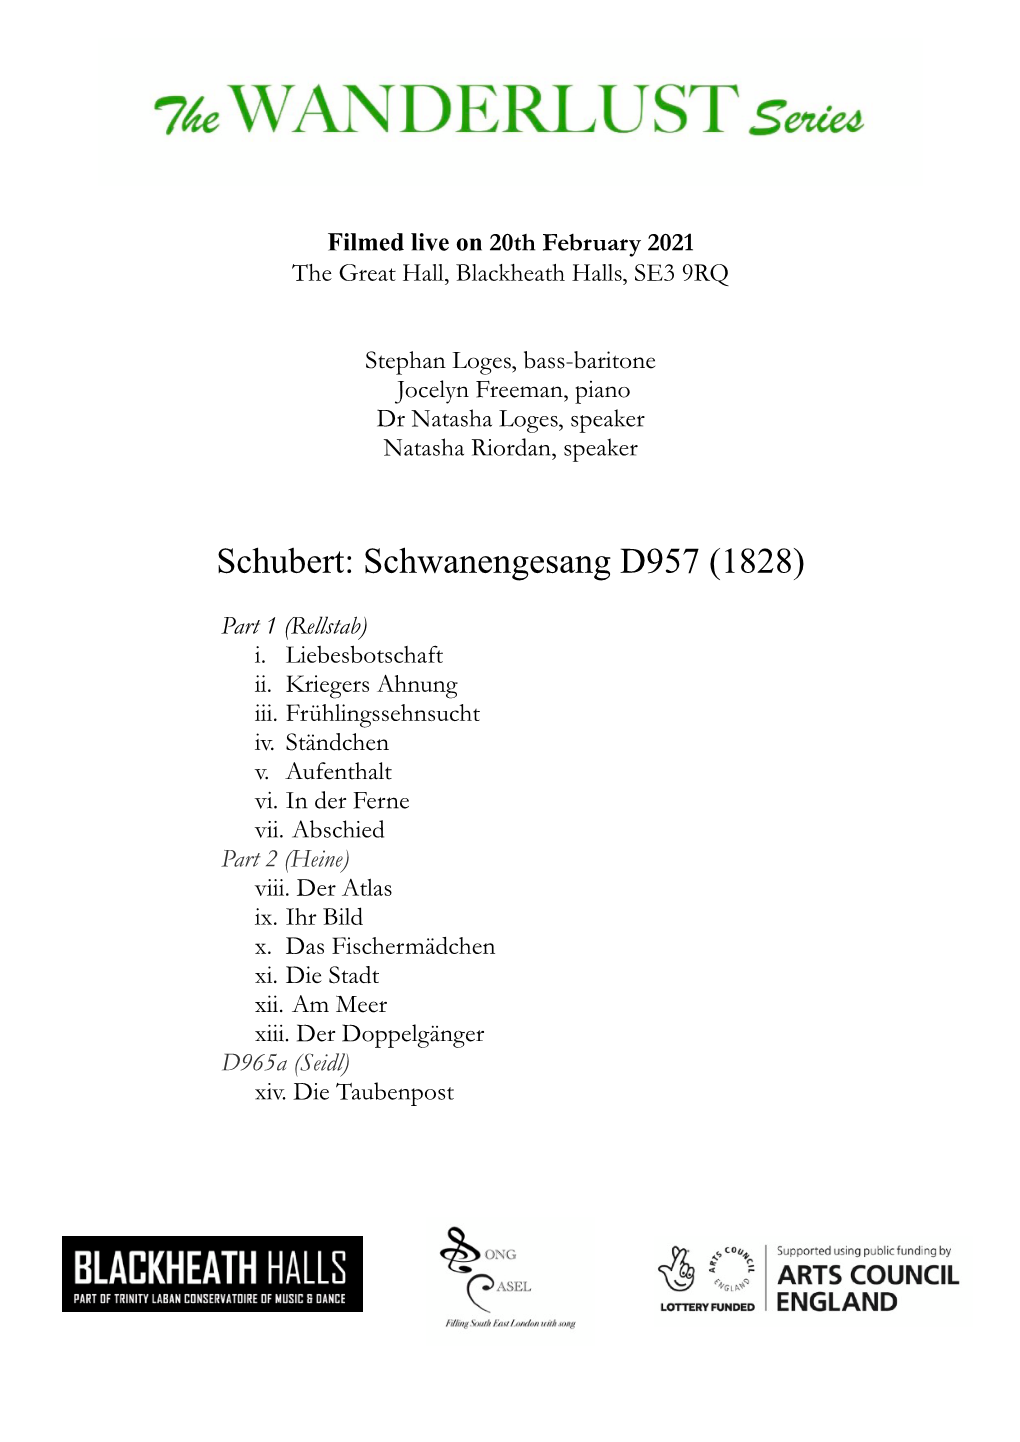 IDAGIO Schwanengesang Programme